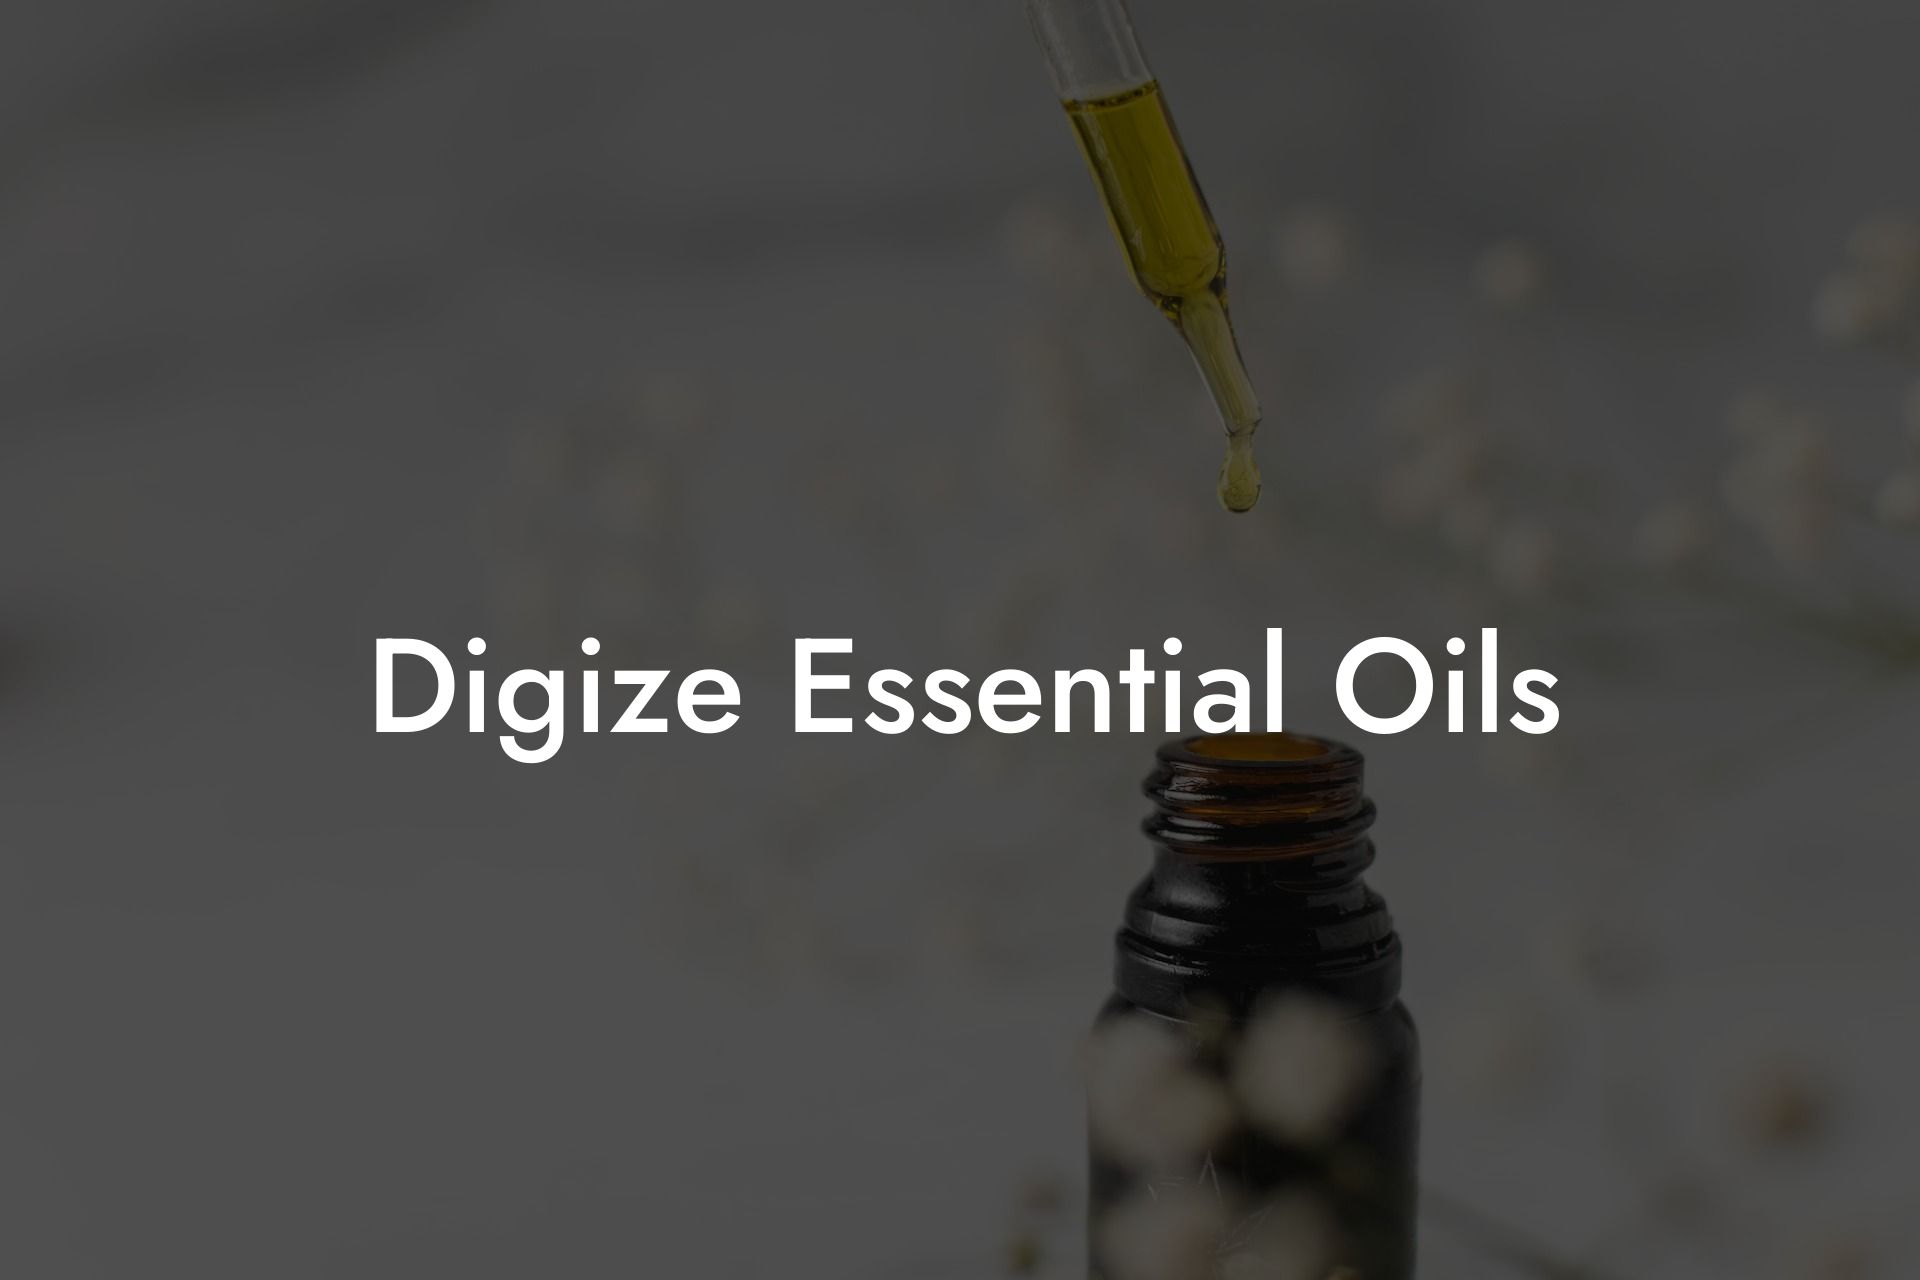 Digize Essential Oils